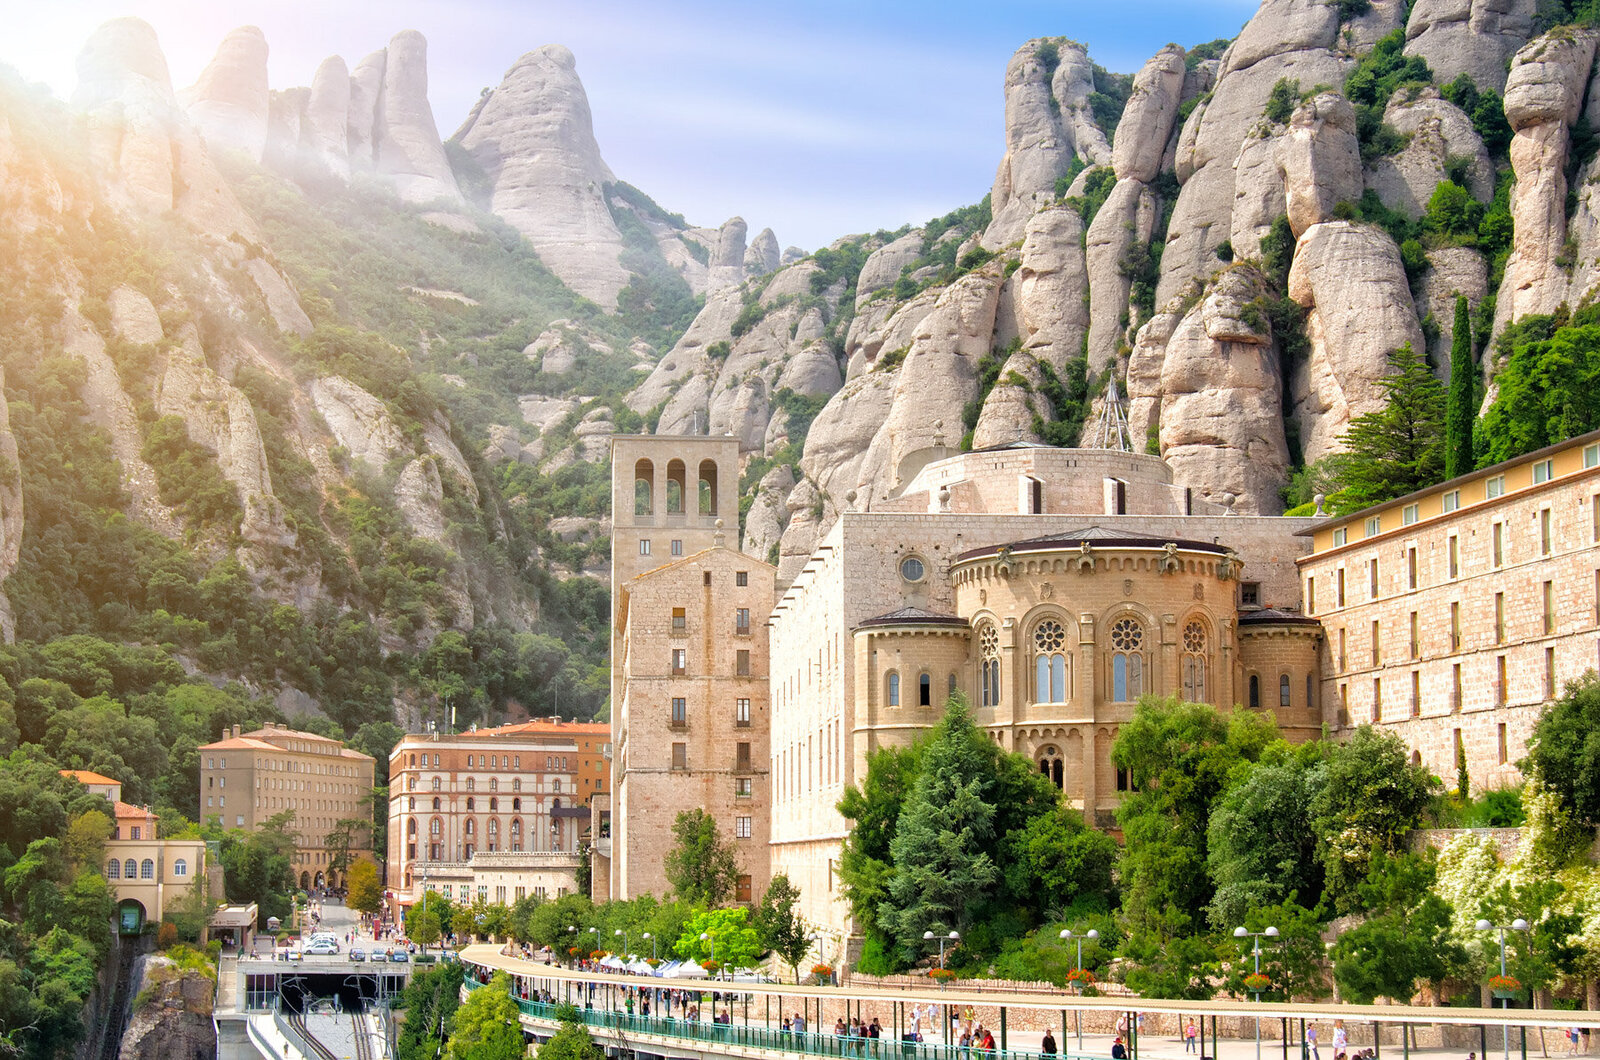 Santa Maria de Montserrat is a Benedictine abbey located on the mountain of Montserrat.